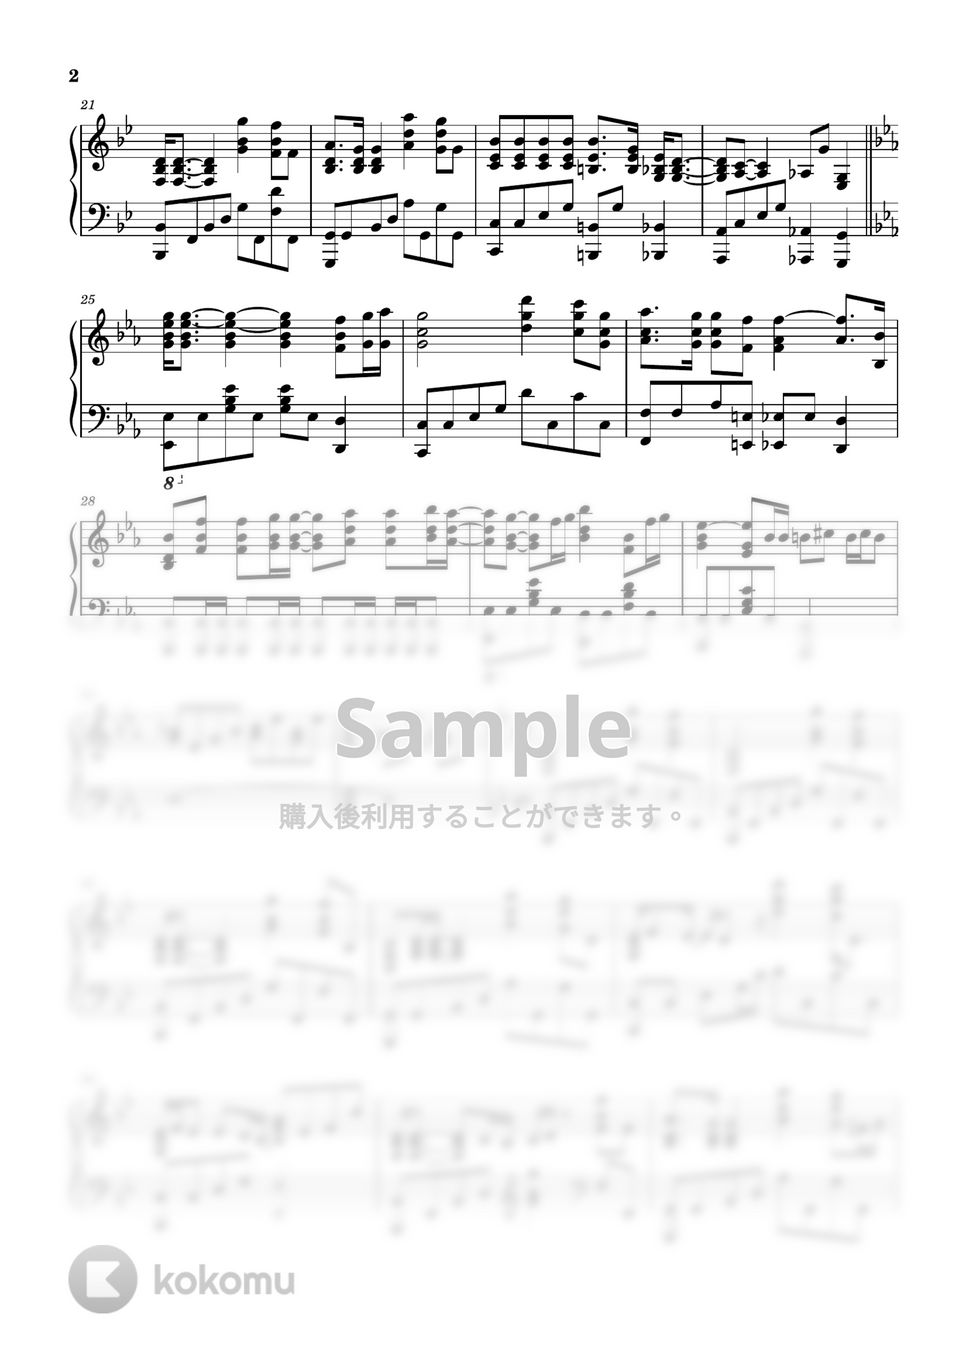 Queen - Bohemin Rhapsody (ピアノソロ) by MIKA